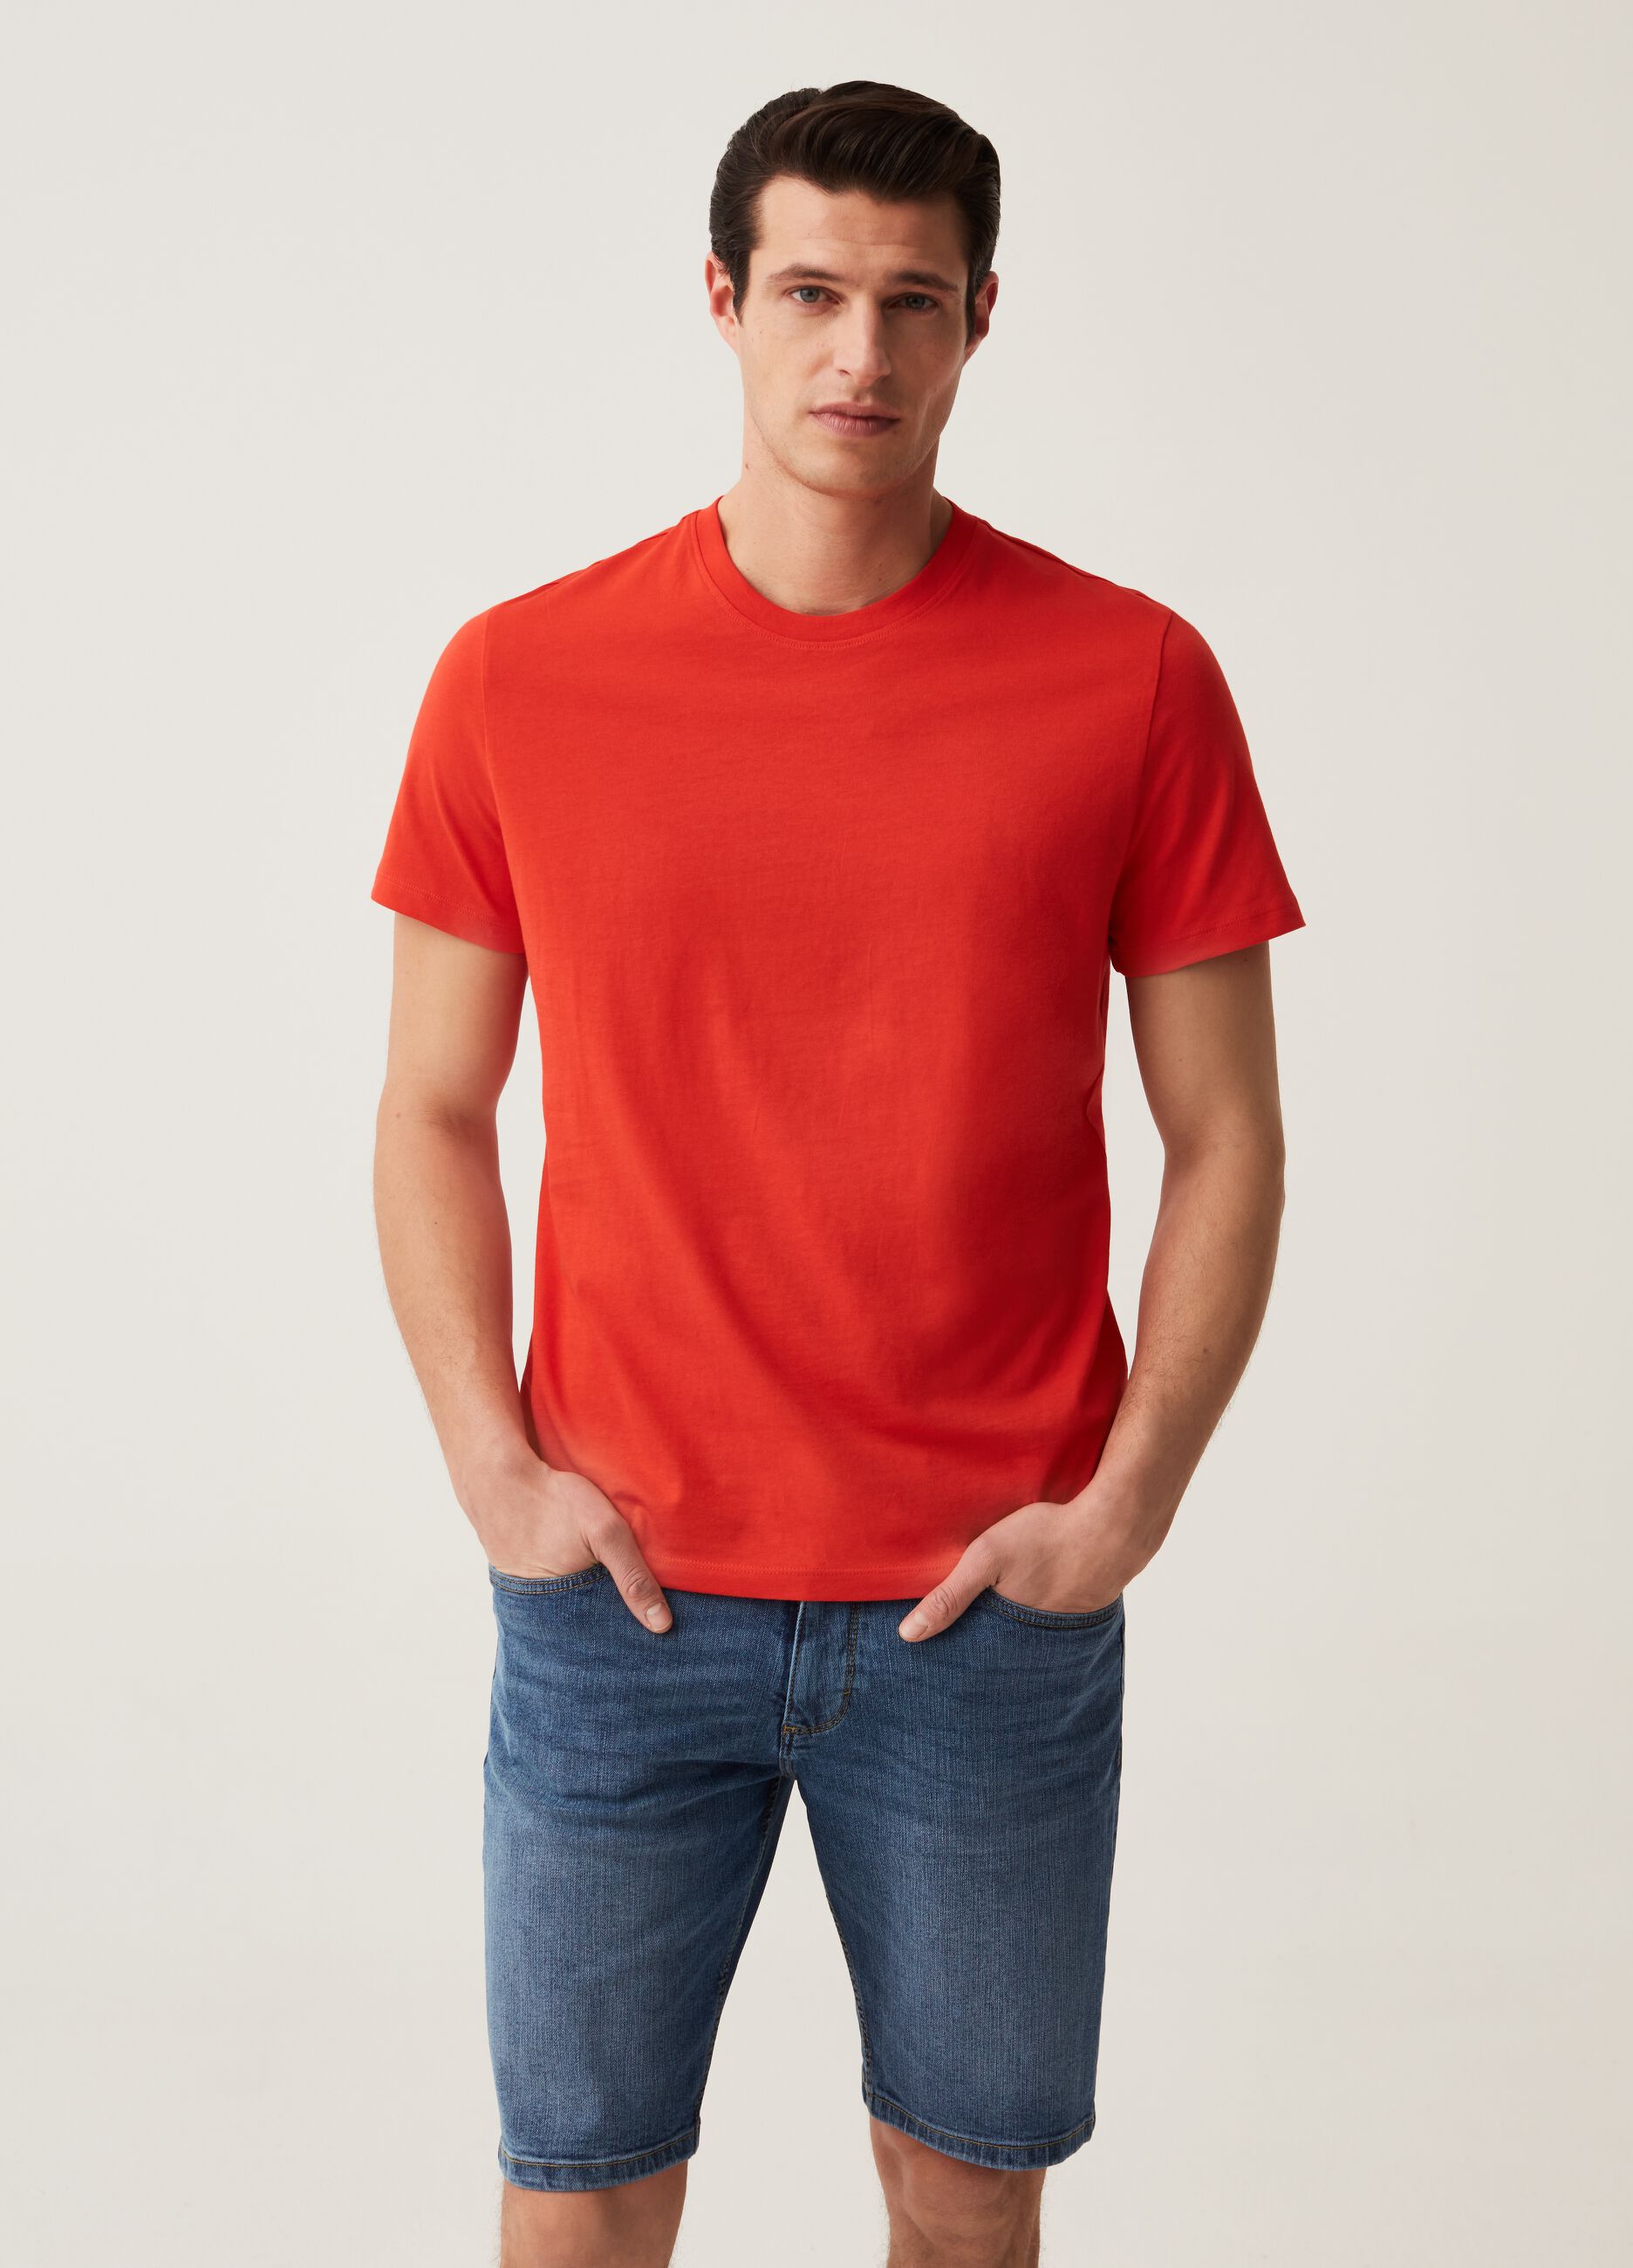 Organic cotton T-shirt with round neck